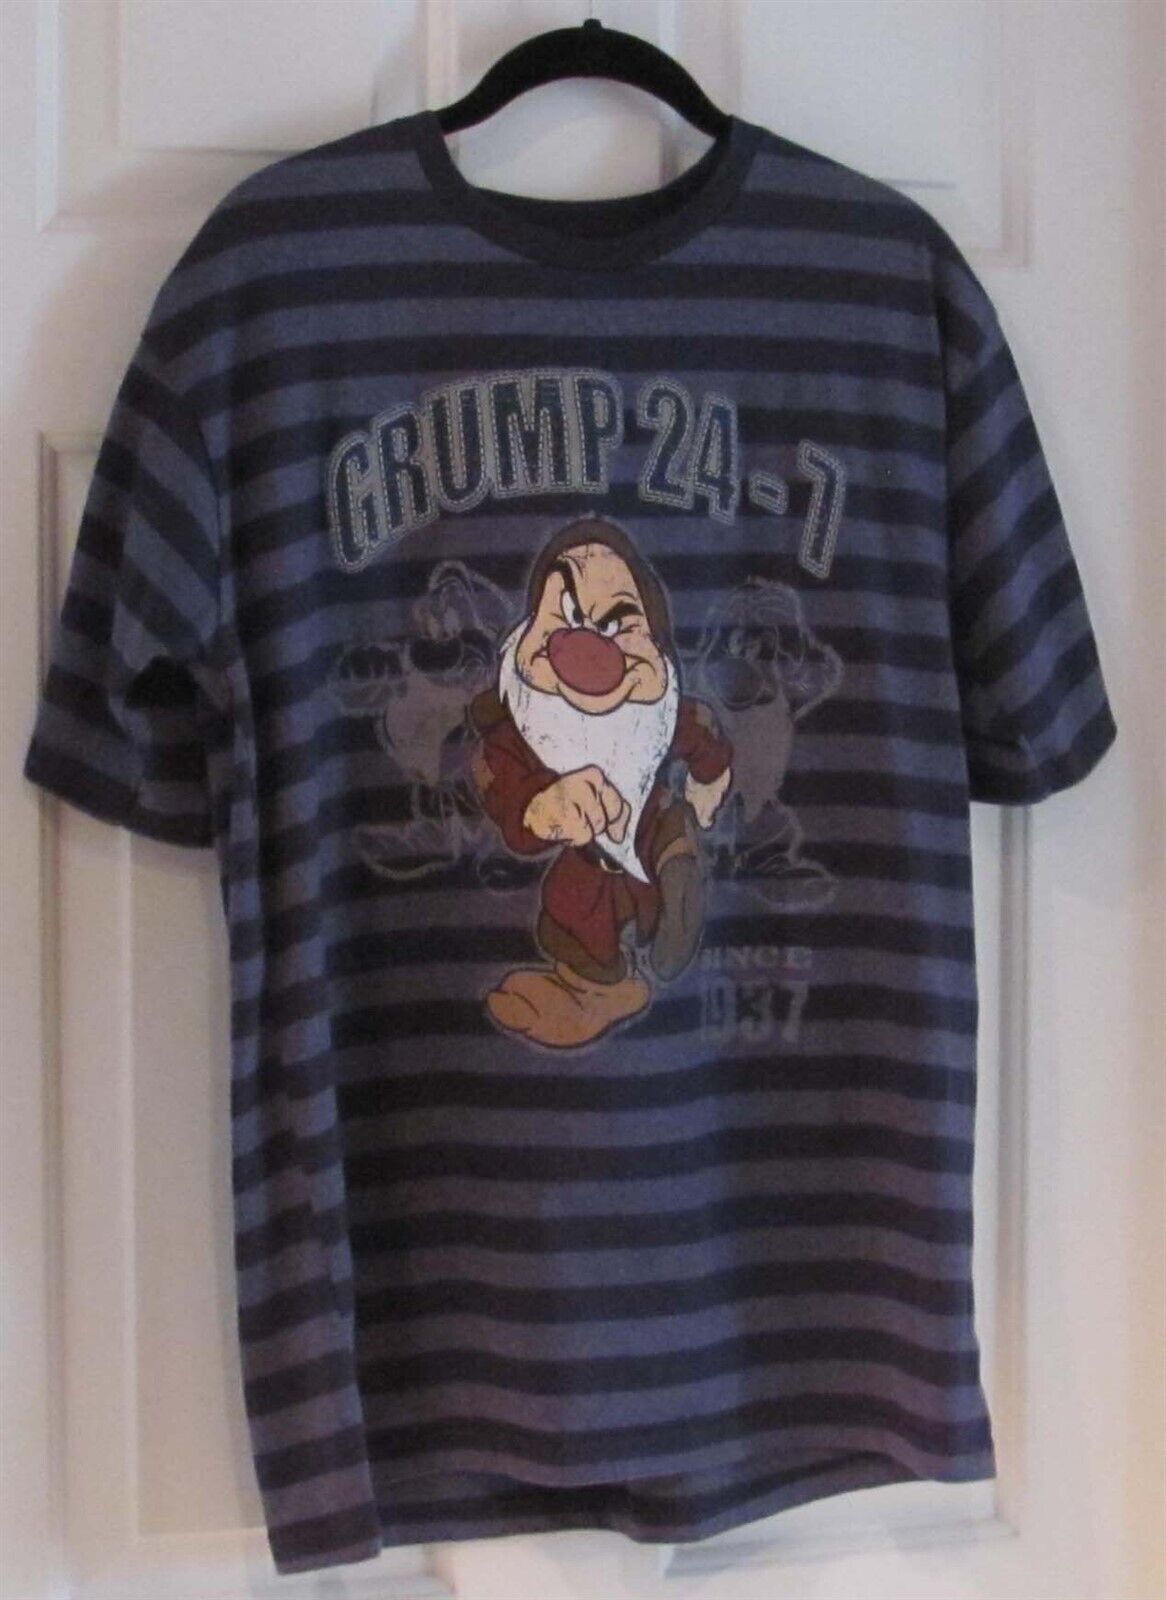 Disney-Grumpy T-Shirt-Grumpy 24/7 Since 1937 Size Large (VERY rare item)